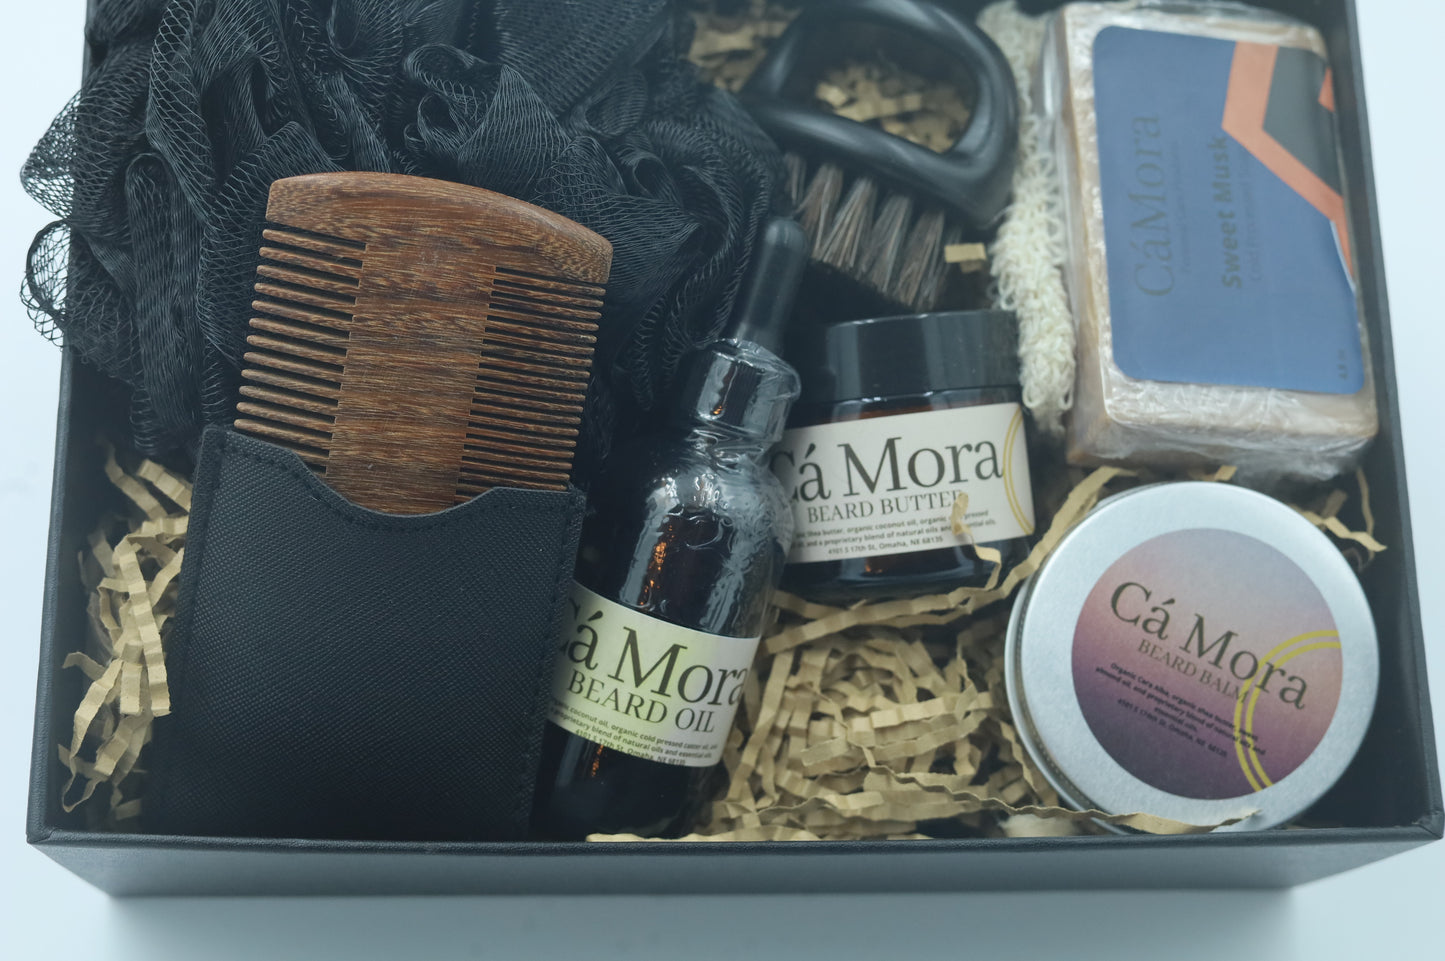 Ca'Mora beard care set with organic beard oil.